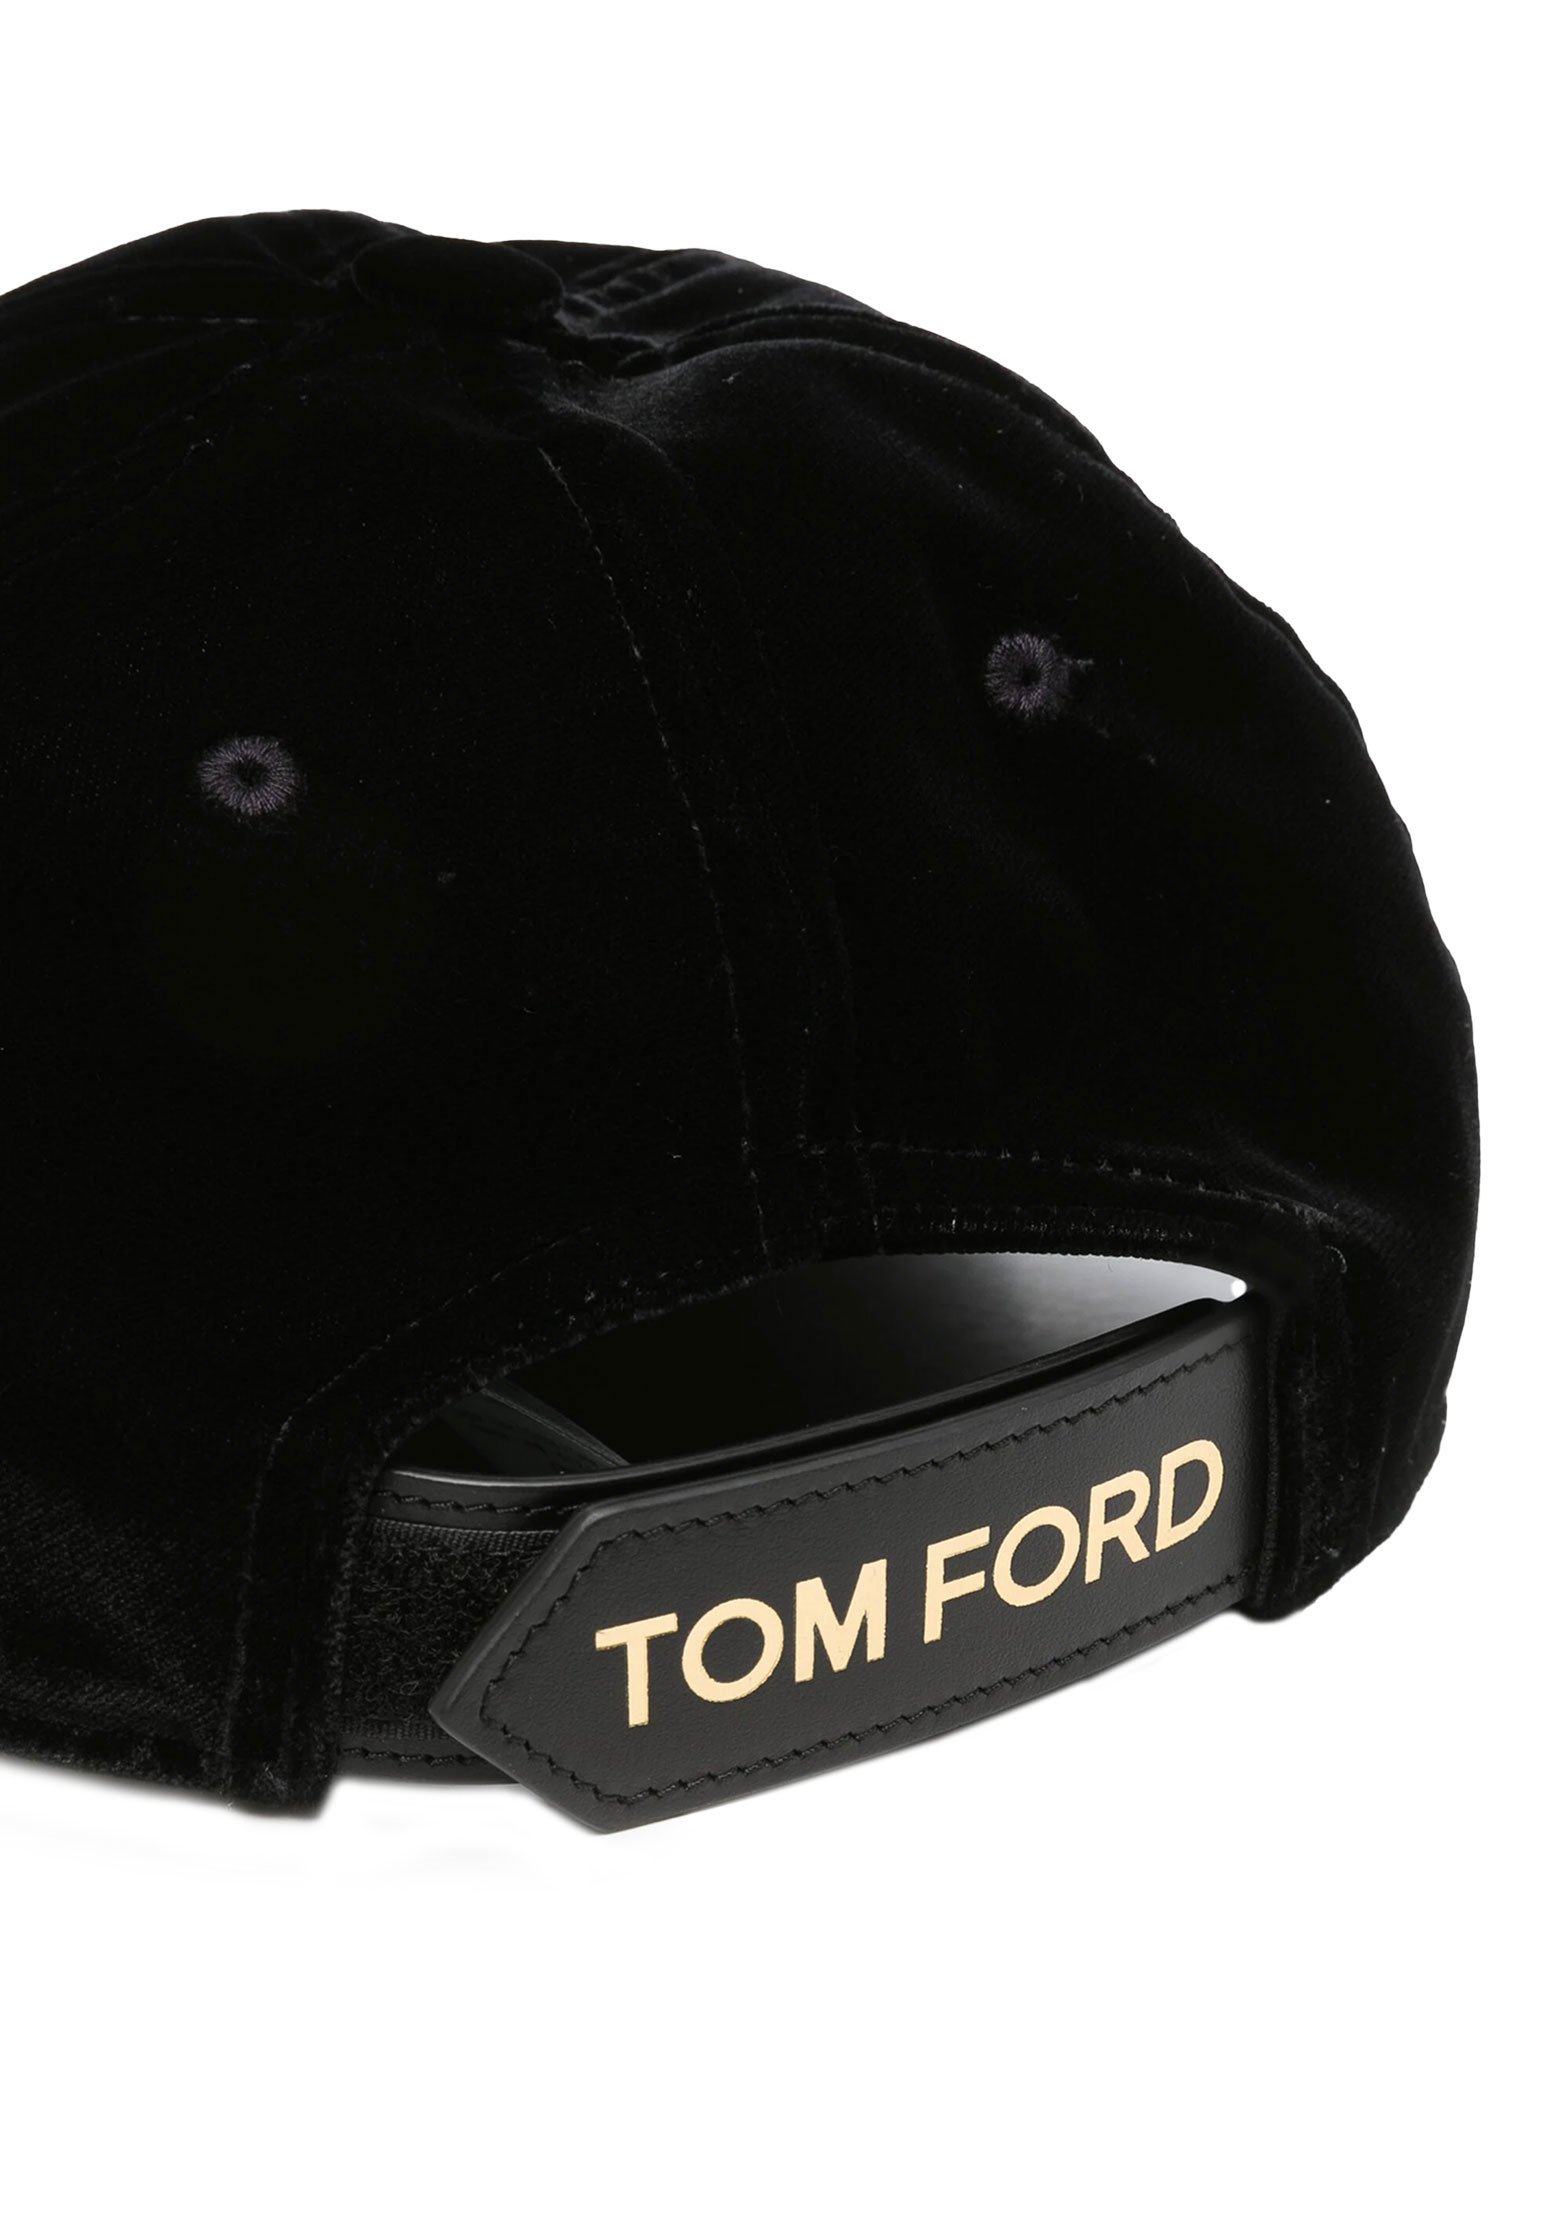 Cap TOM FORD Color: black (Code: 2995) in online store Allure